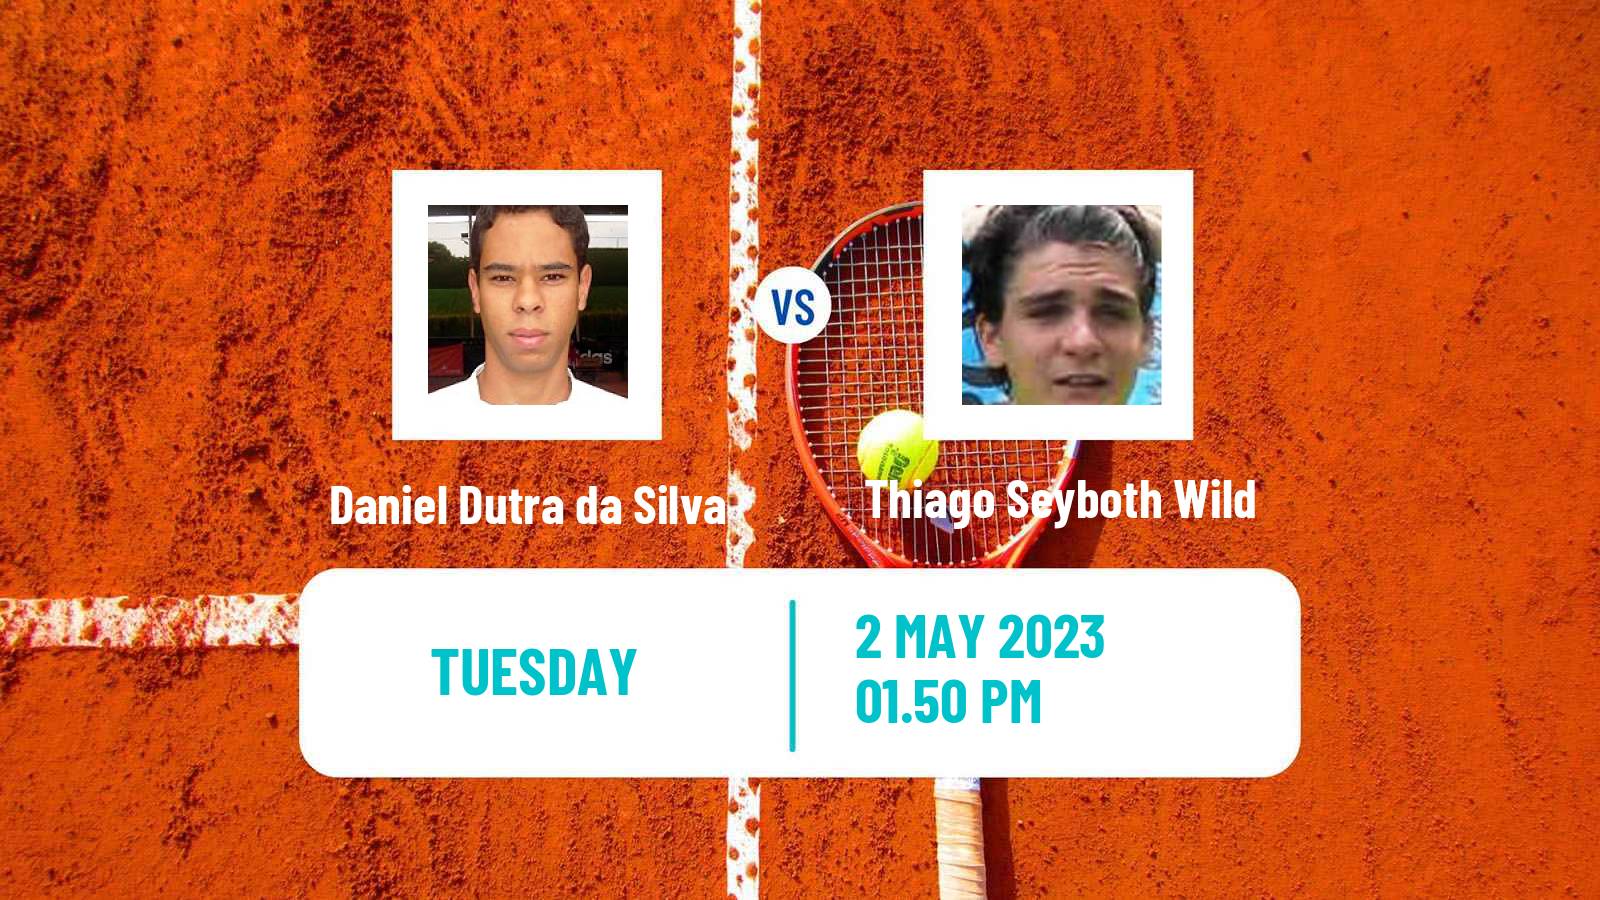 Tennis ATP Challenger Daniel Dutra da Silva - Thiago Seyboth Wild